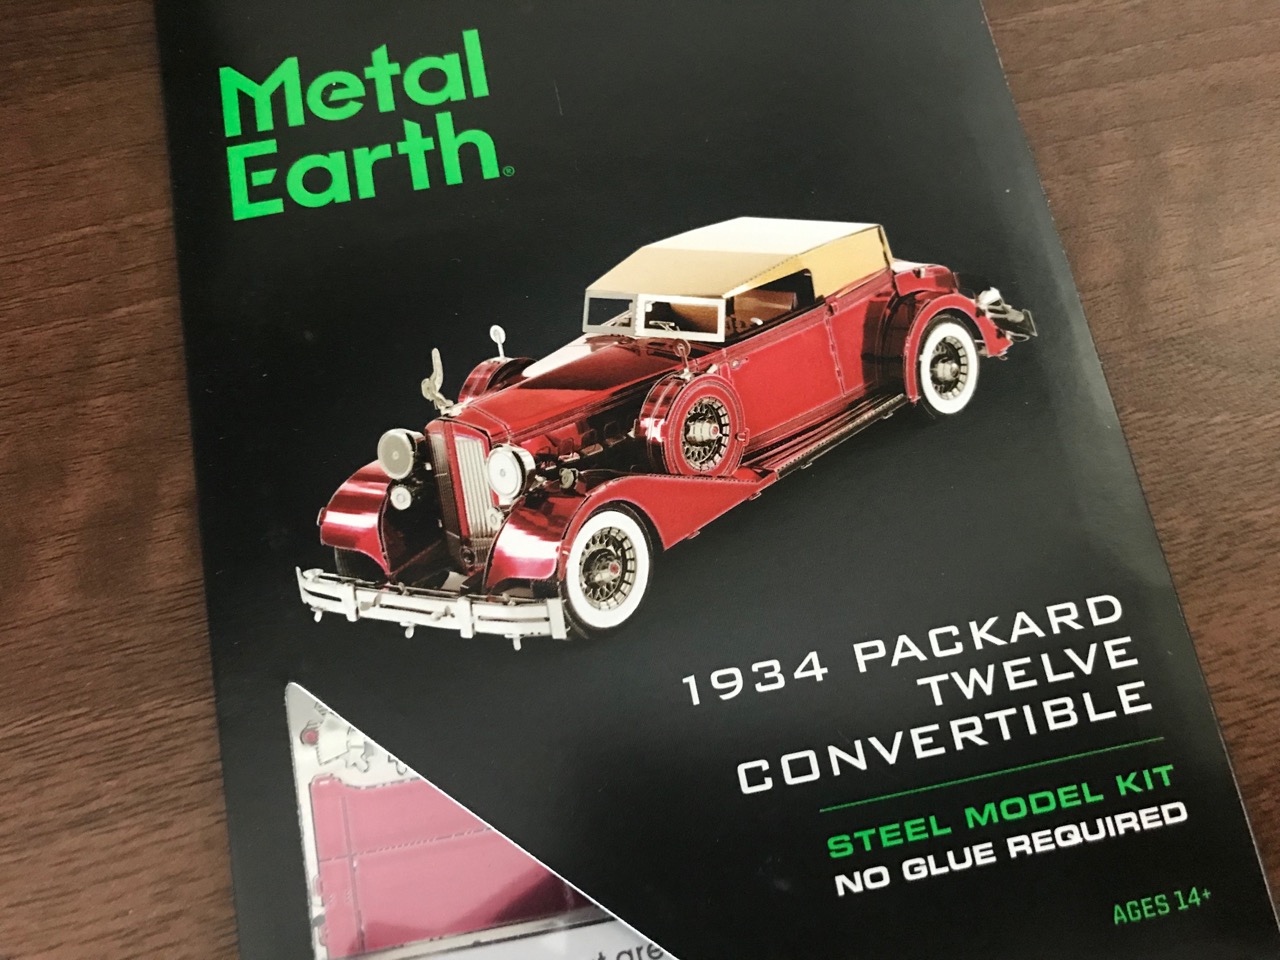 Details about   Fascinations Metal Earth 3D Steel Model Kit 1934 Packard Twelve Convertible 